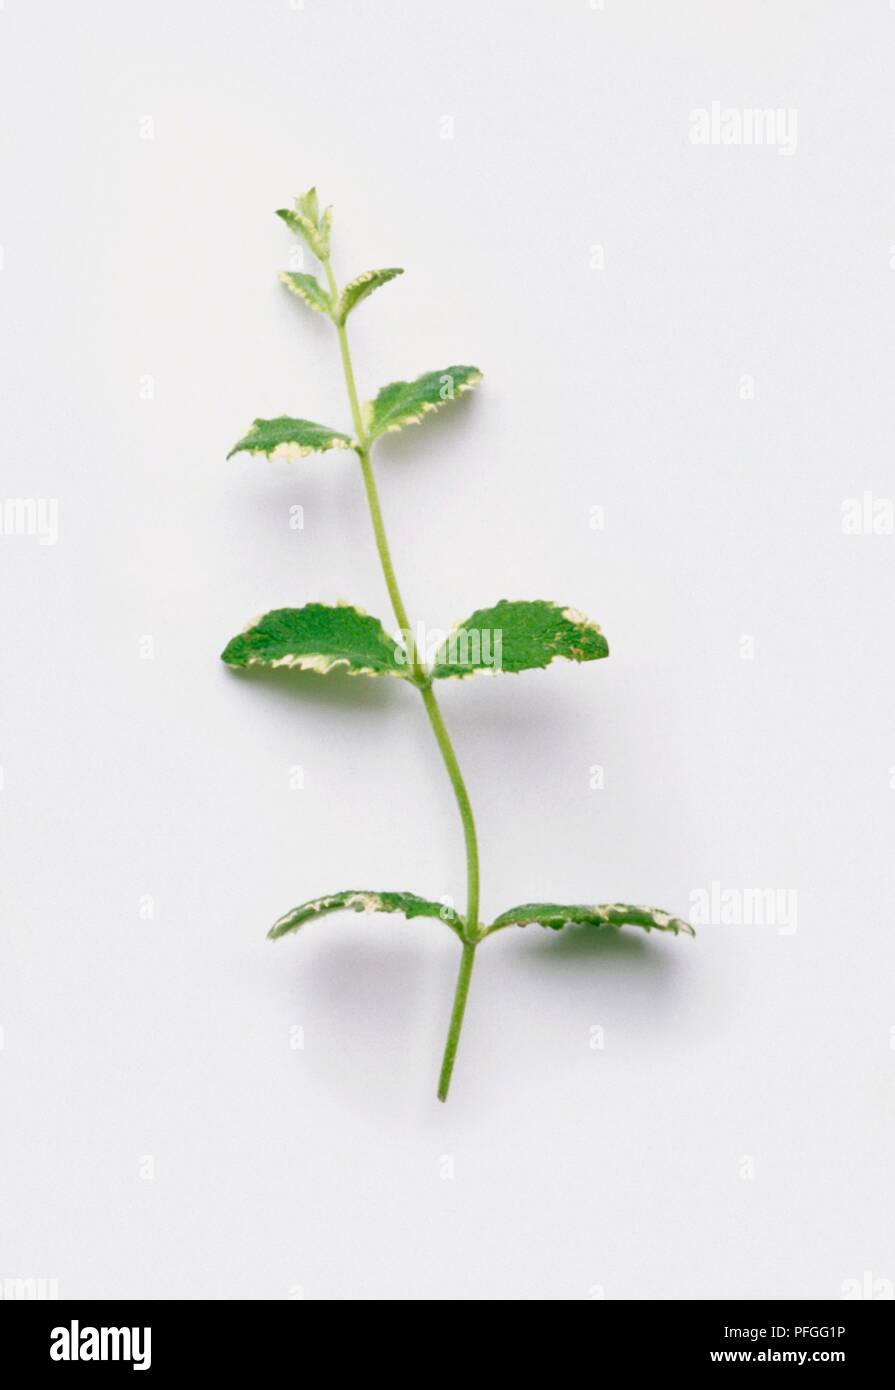 Mentha suaveolens 'Variegata' (Pineapple mint), green leaves on long stem Stock Photo